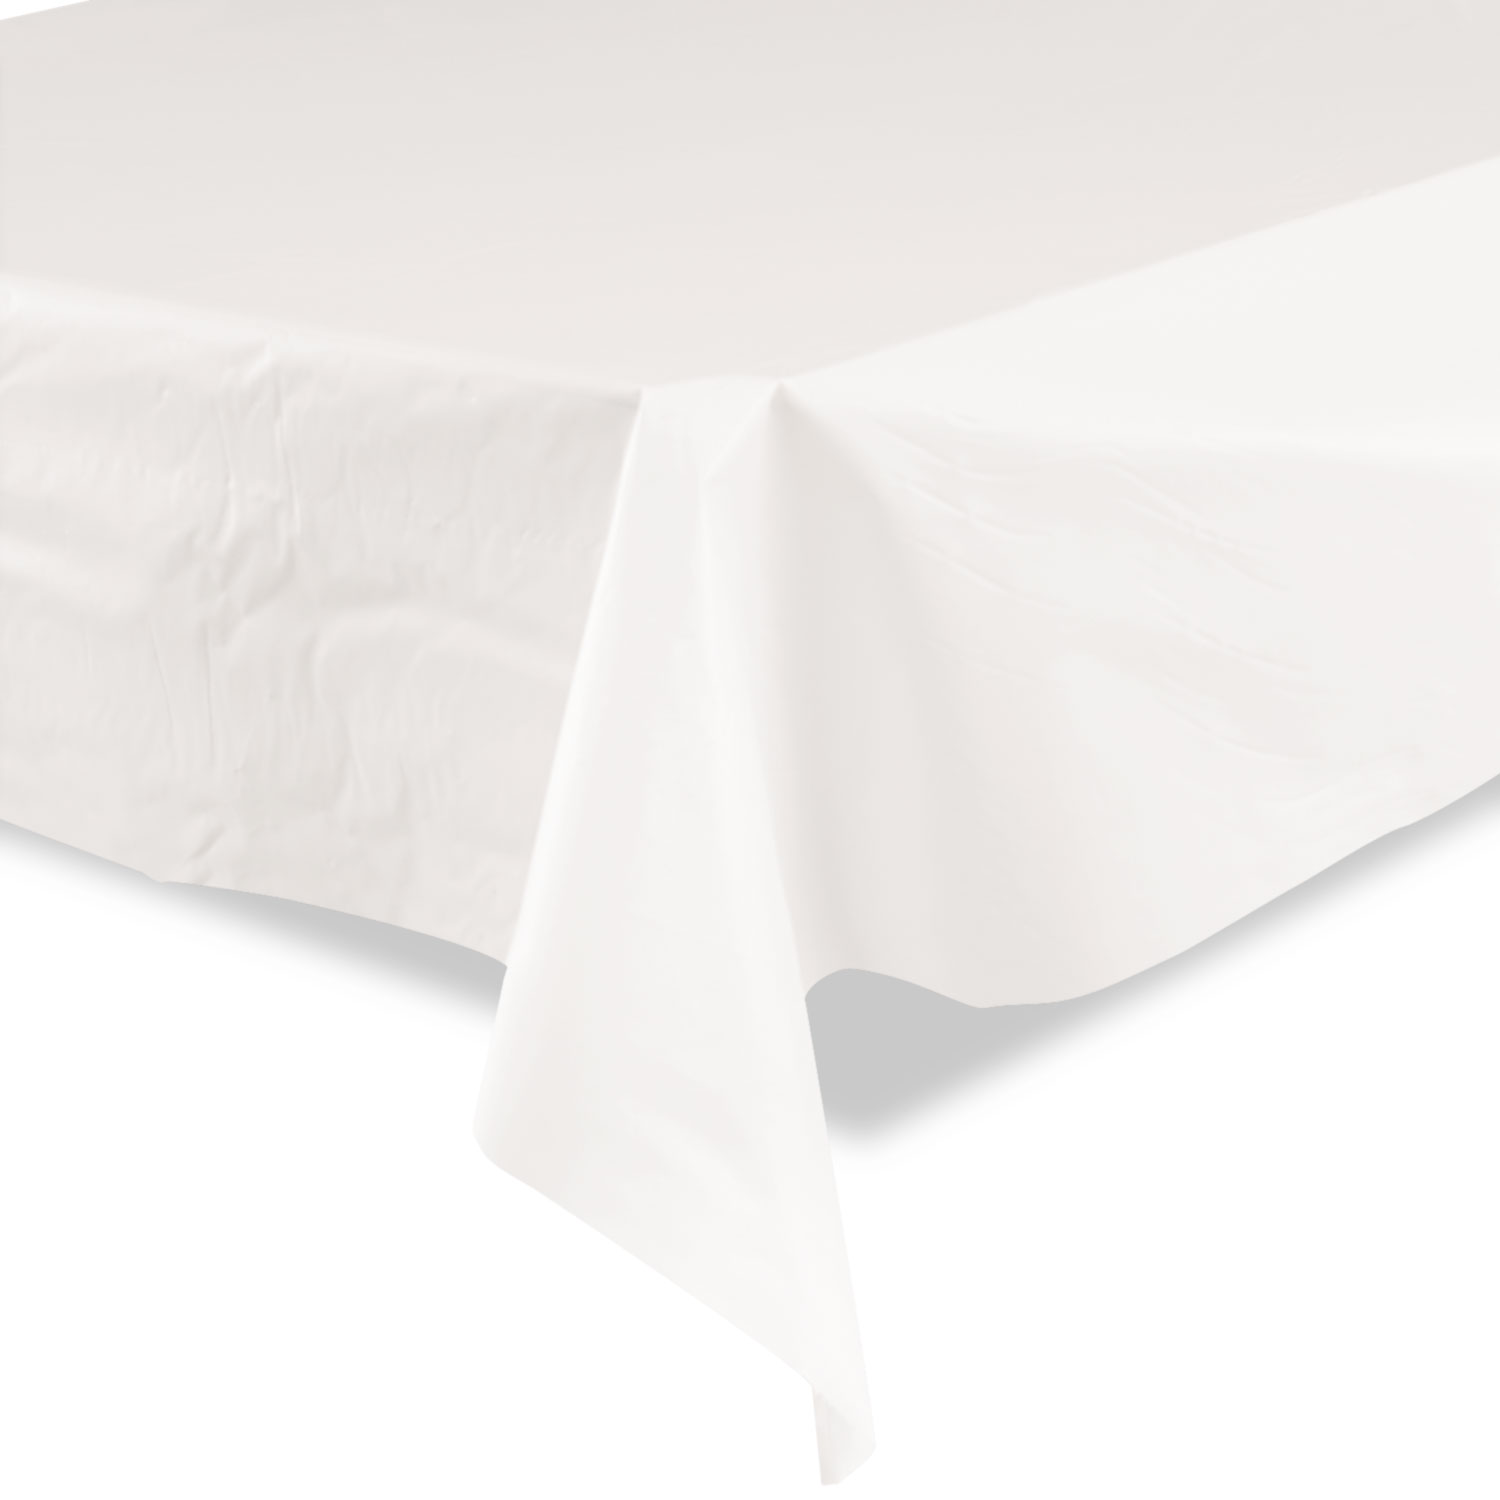 Bio-Degradable Plastic Table Cover, 40 x 300ft, White